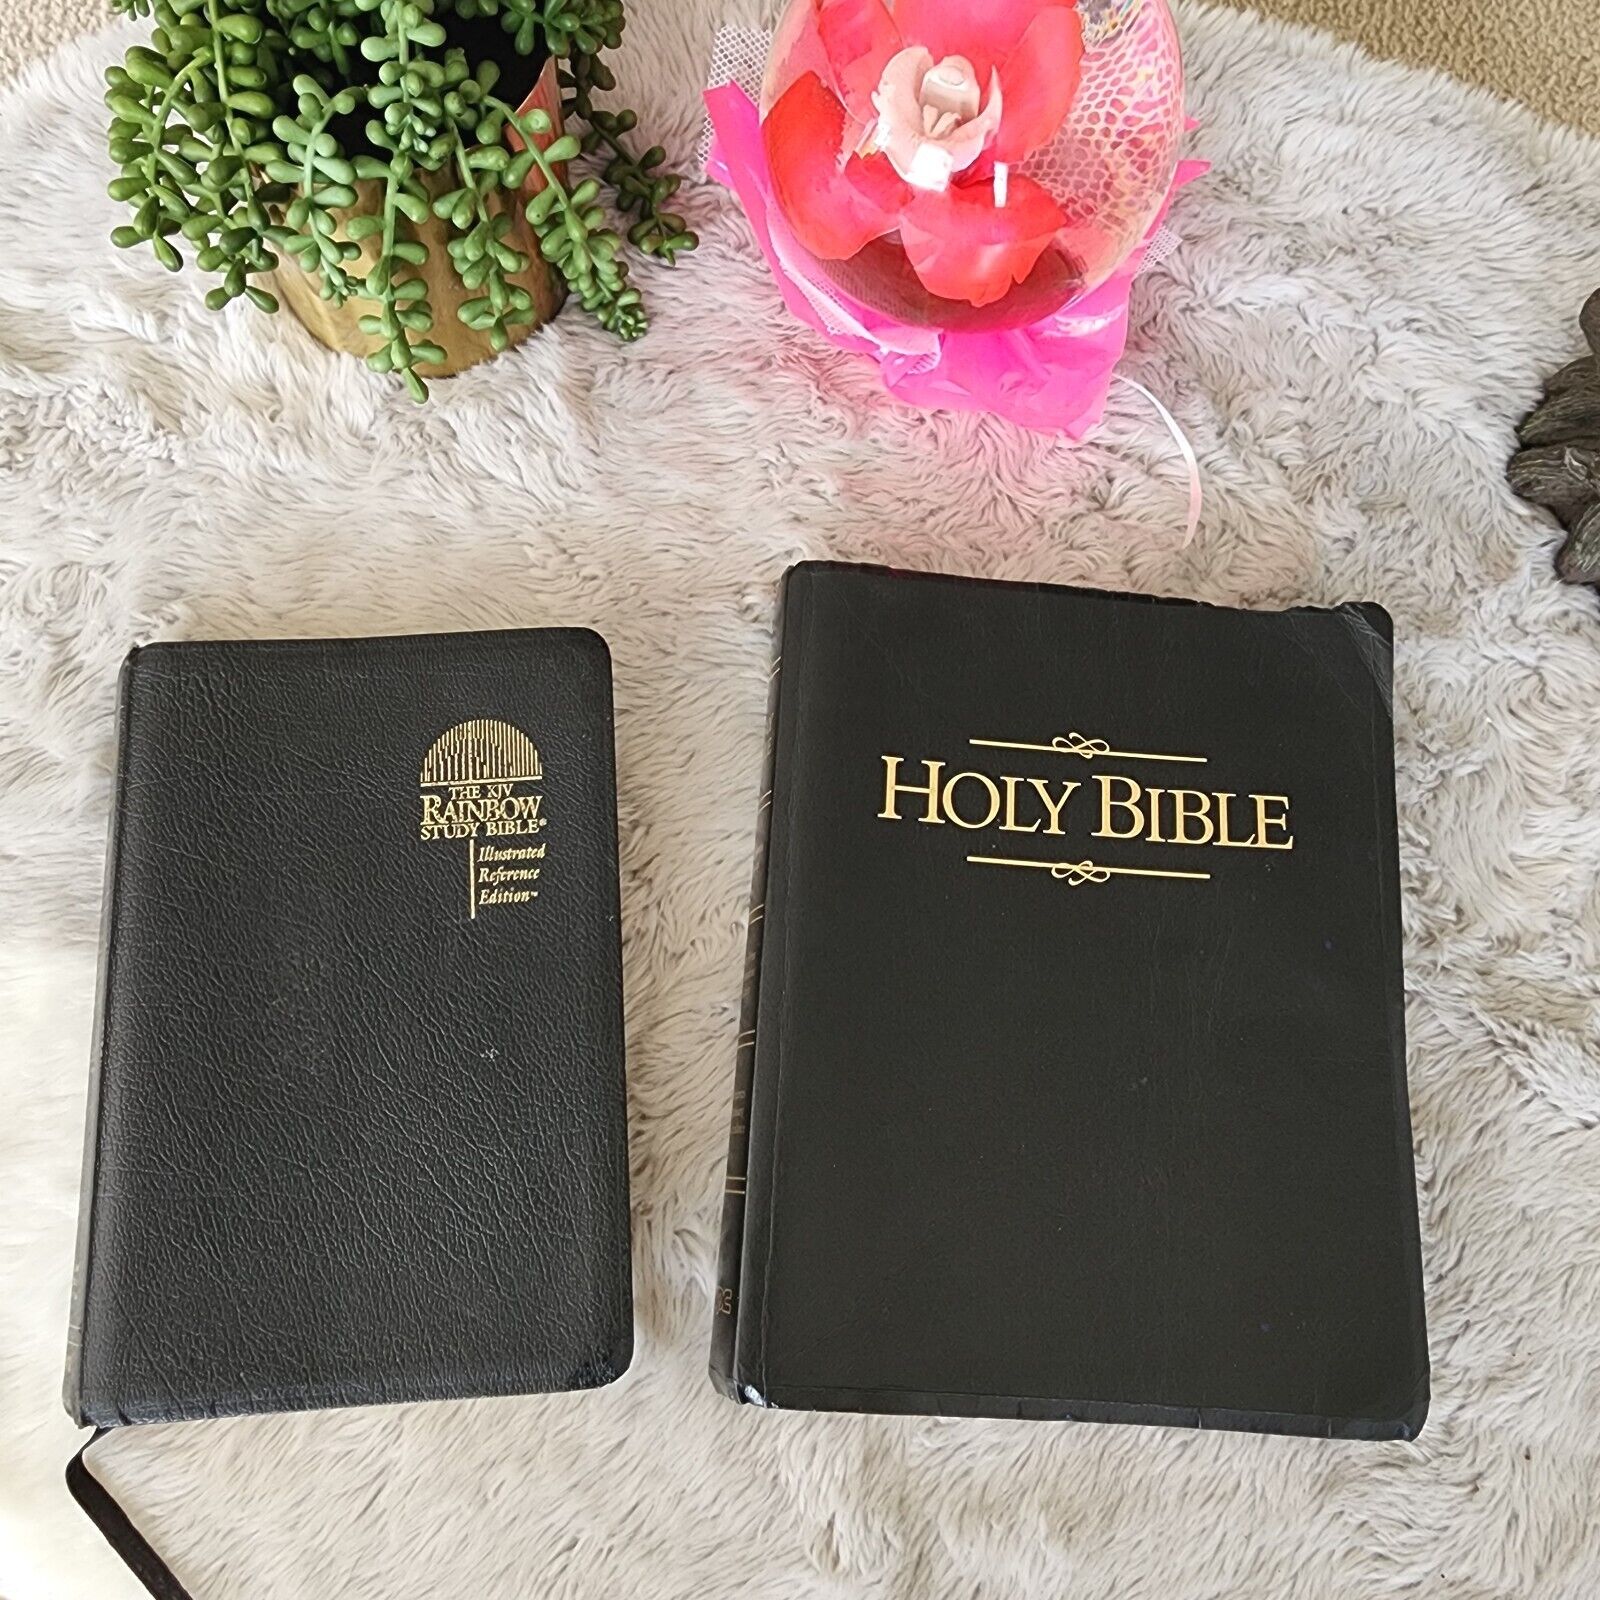 Lot Of 2 Bibles - Giant Print Presentation Edition & Rainbow The KJV Study Bible